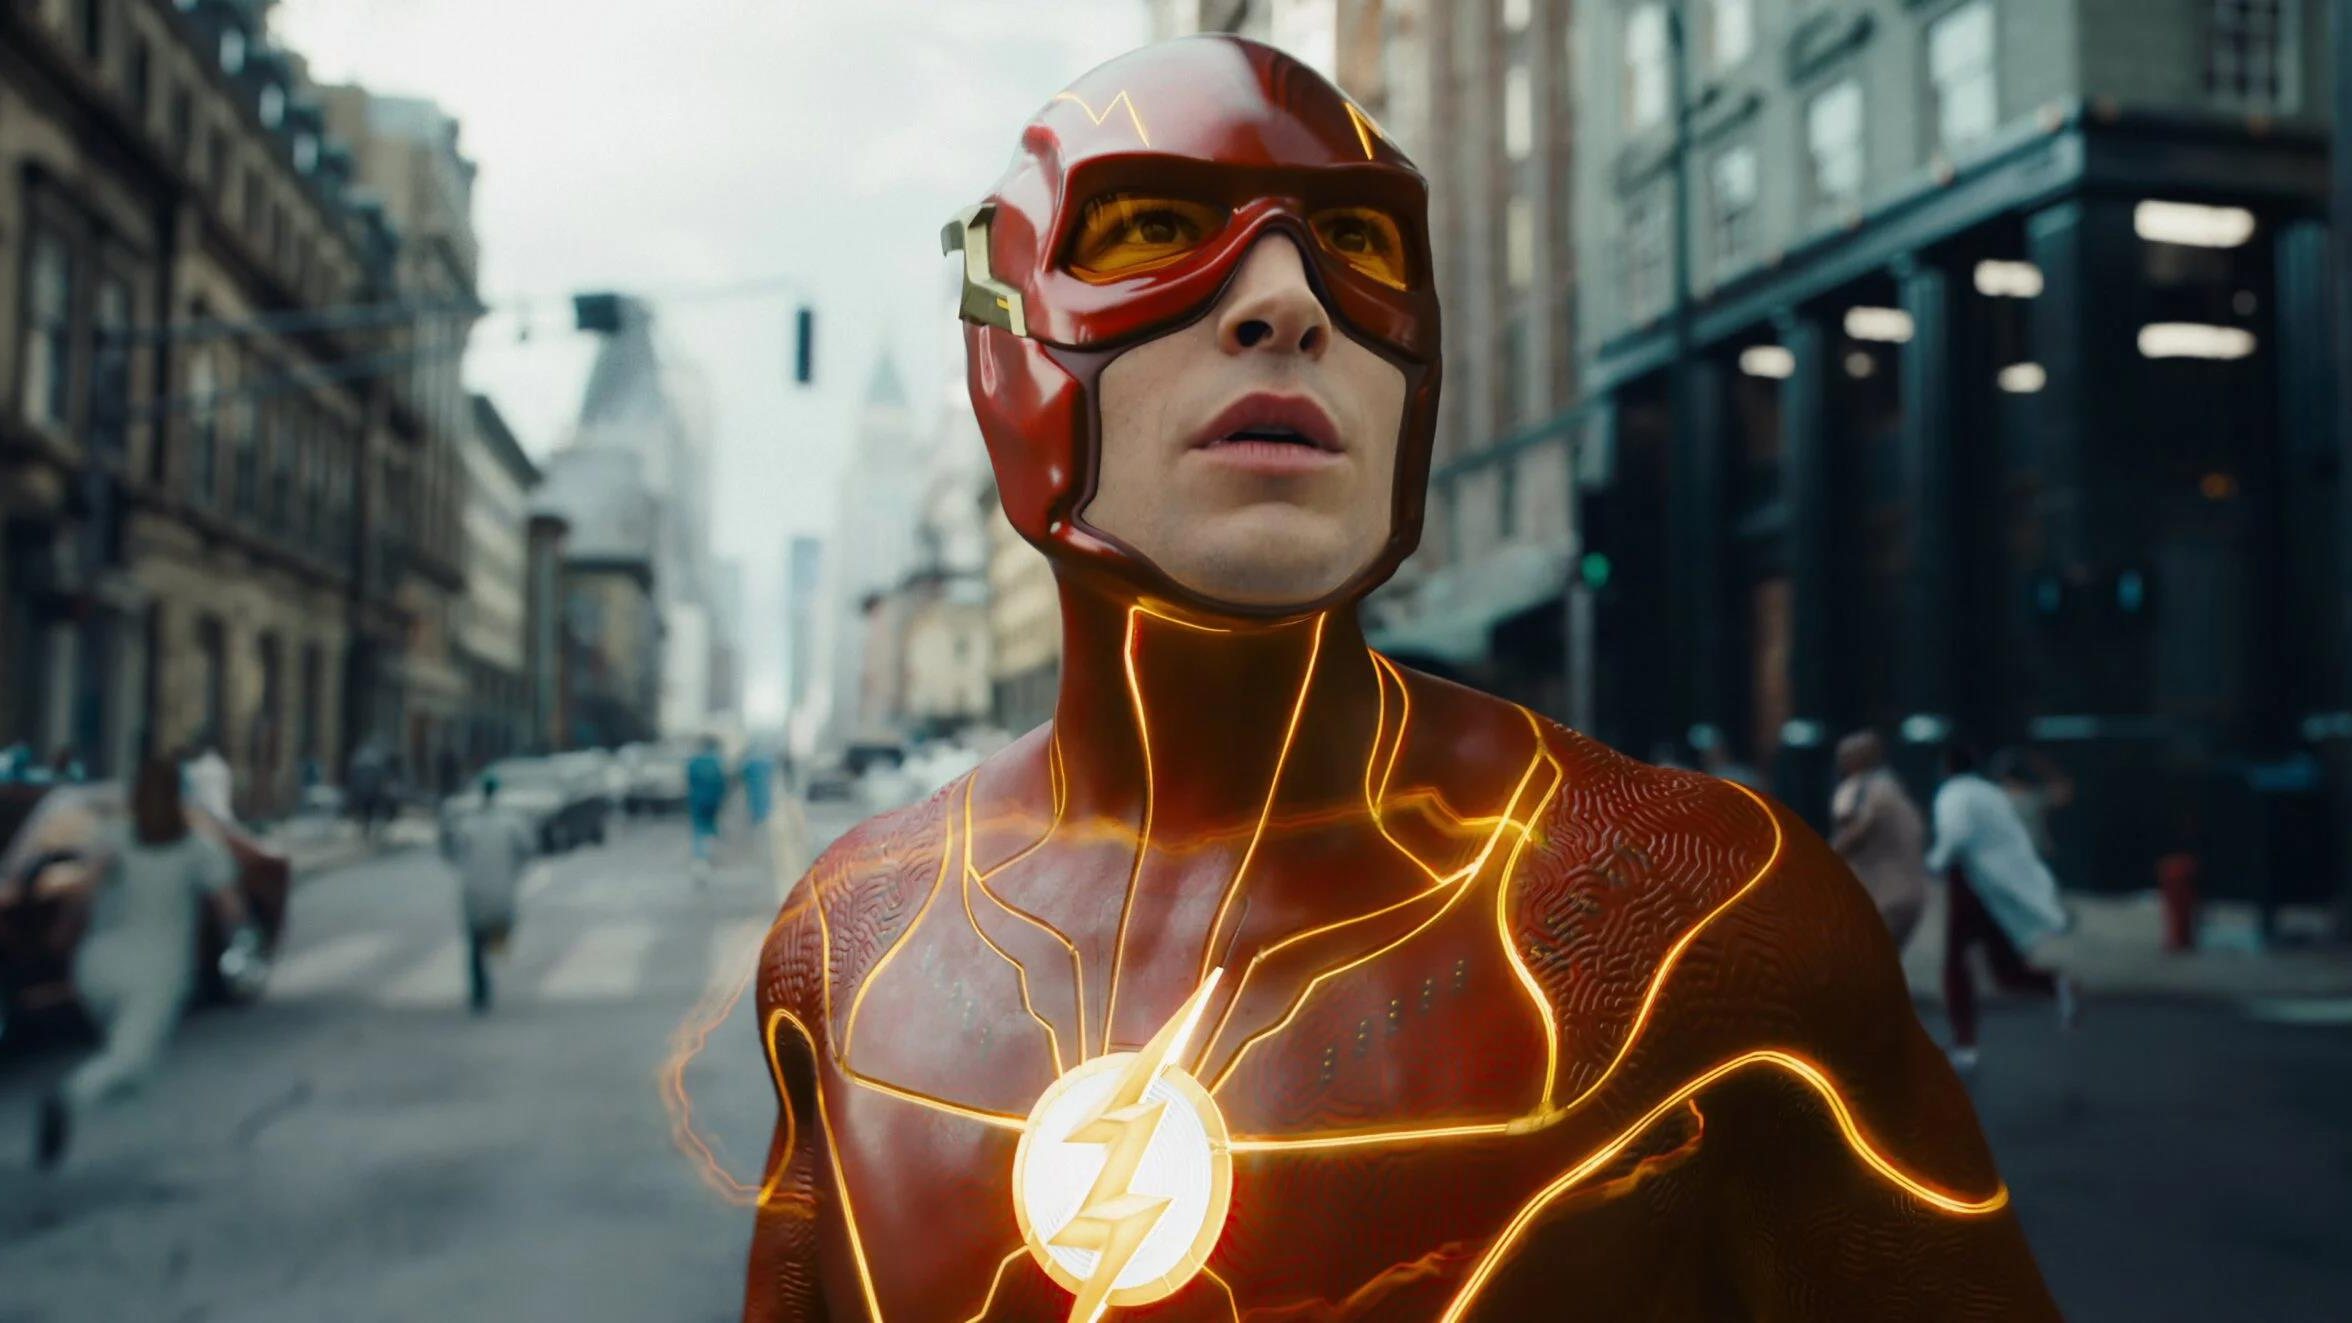 The Flash” um enorme espalhafato espácio-temporal para nada